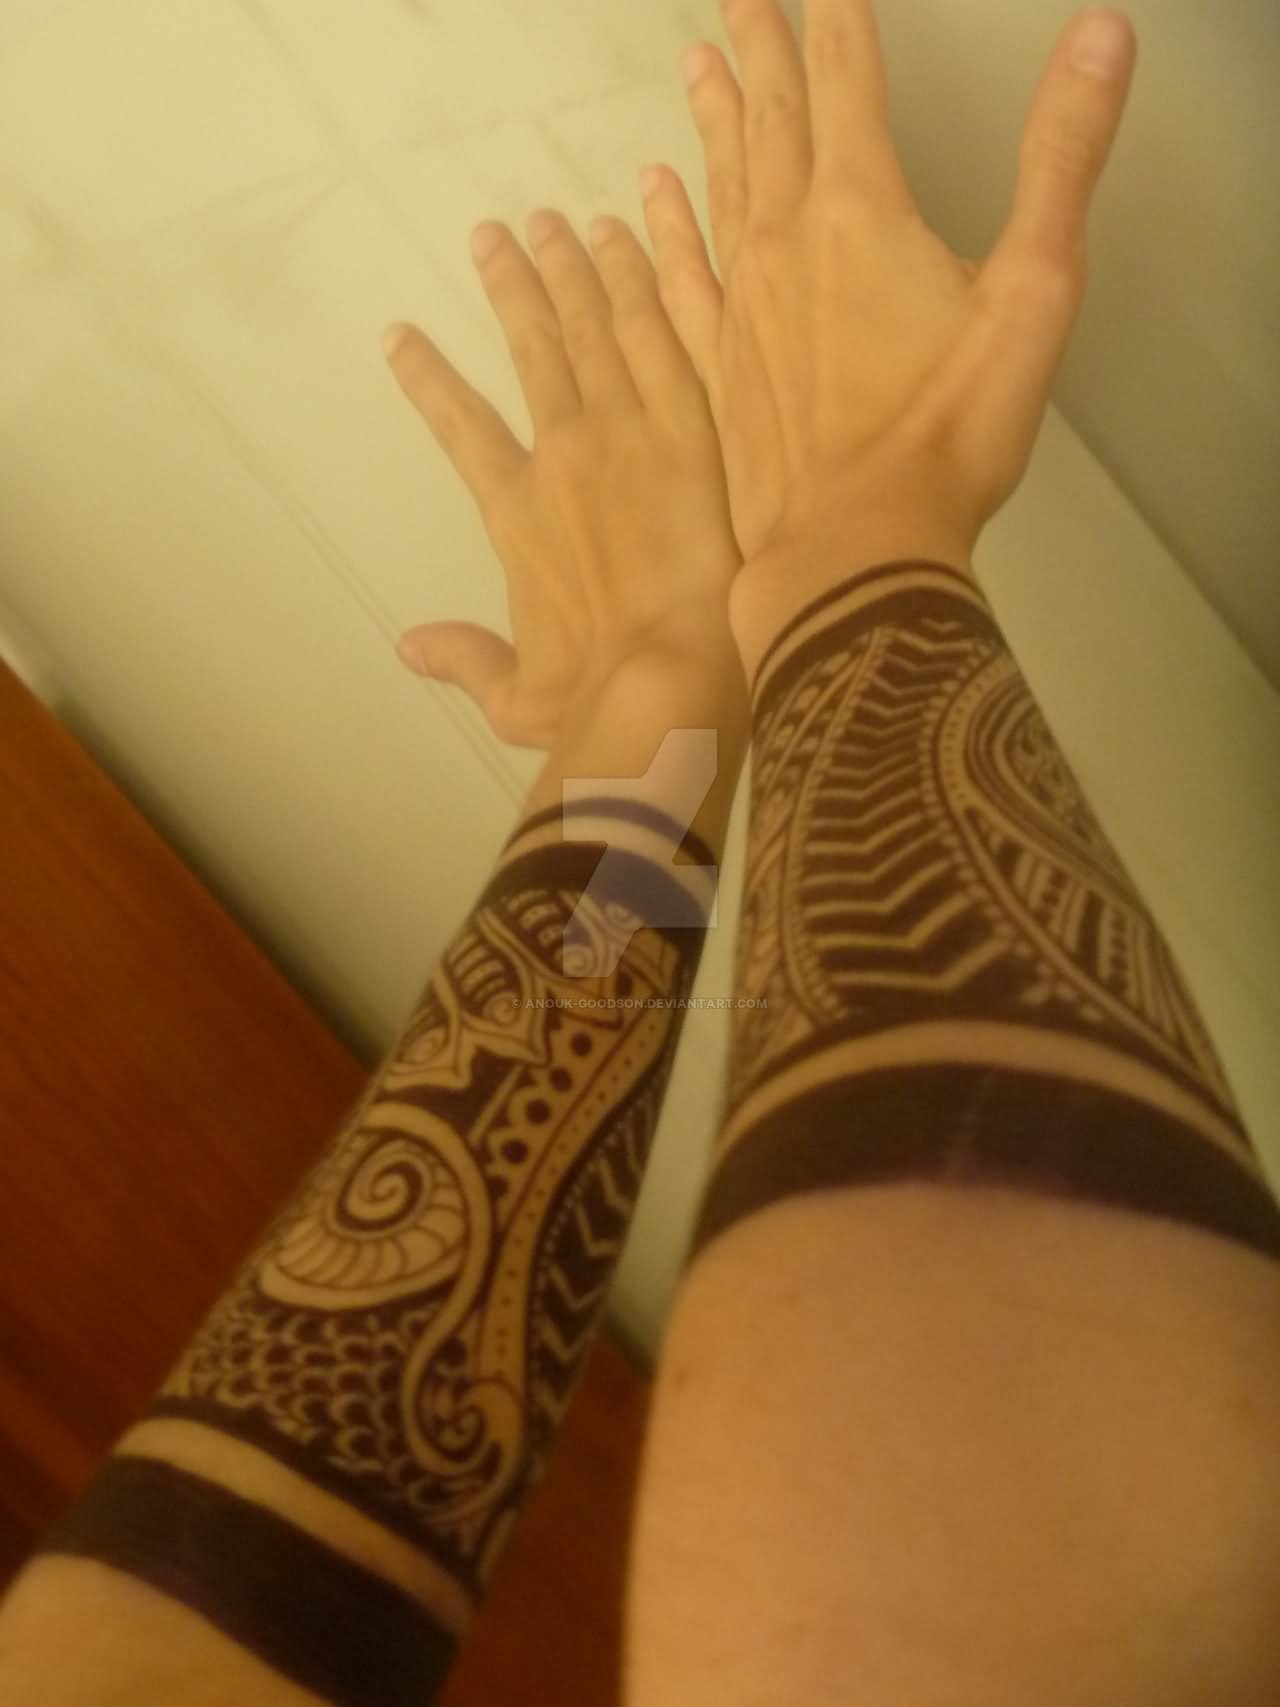 Inspiring Armband Tattoo On Couple Forearm By Anouk Goodson